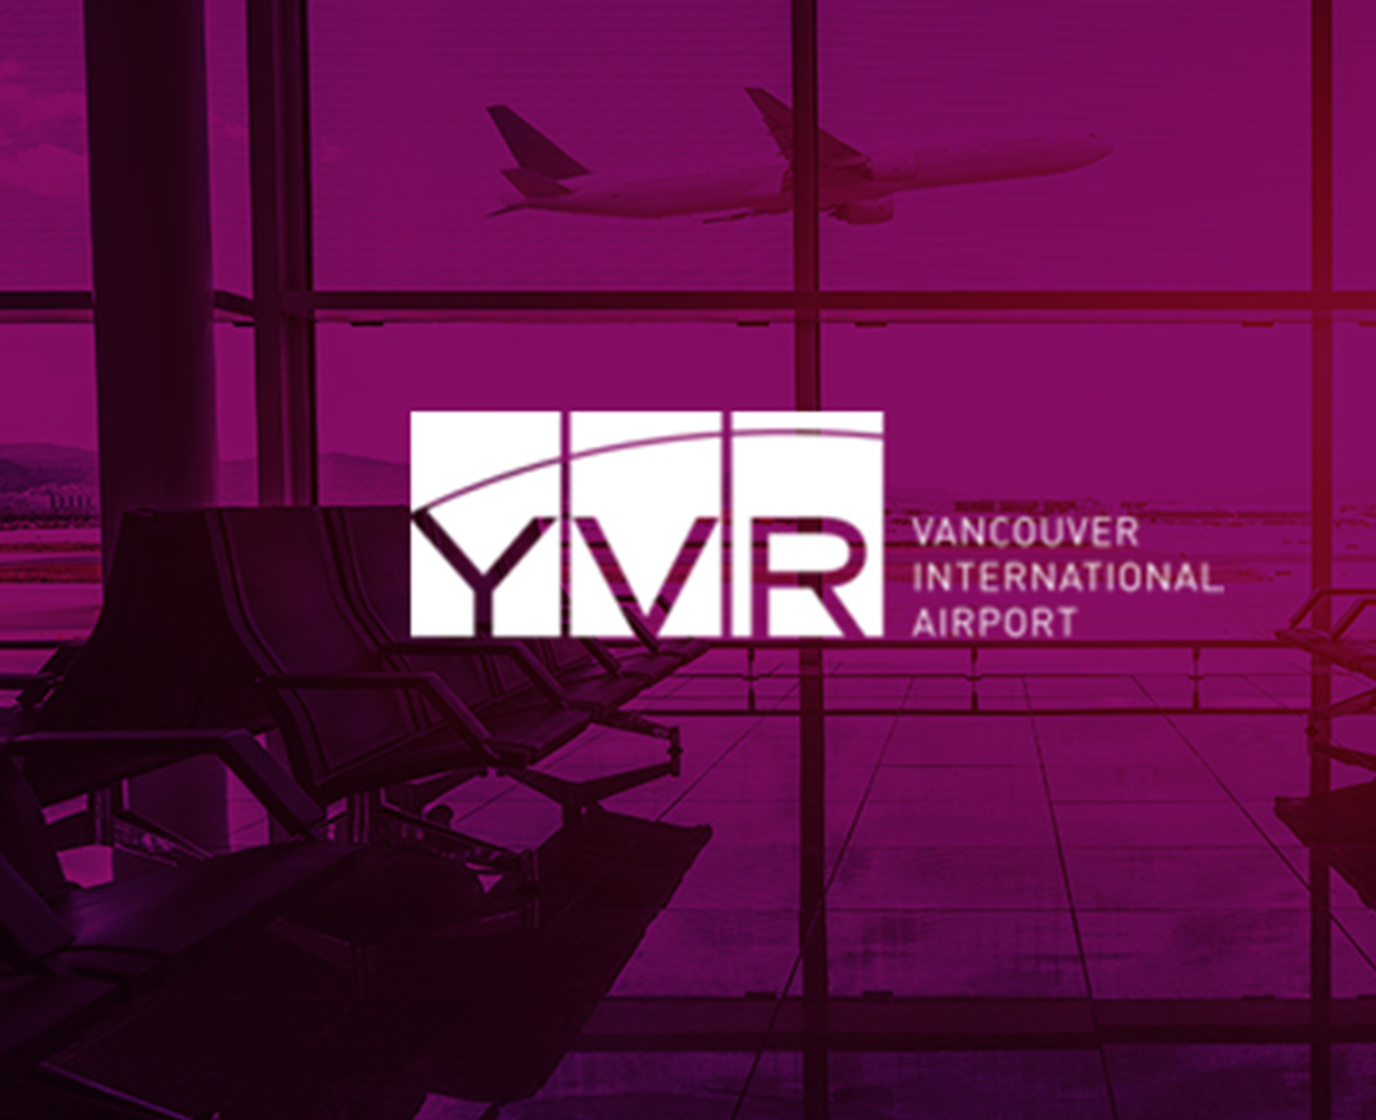 Vancouver International Airport Logo